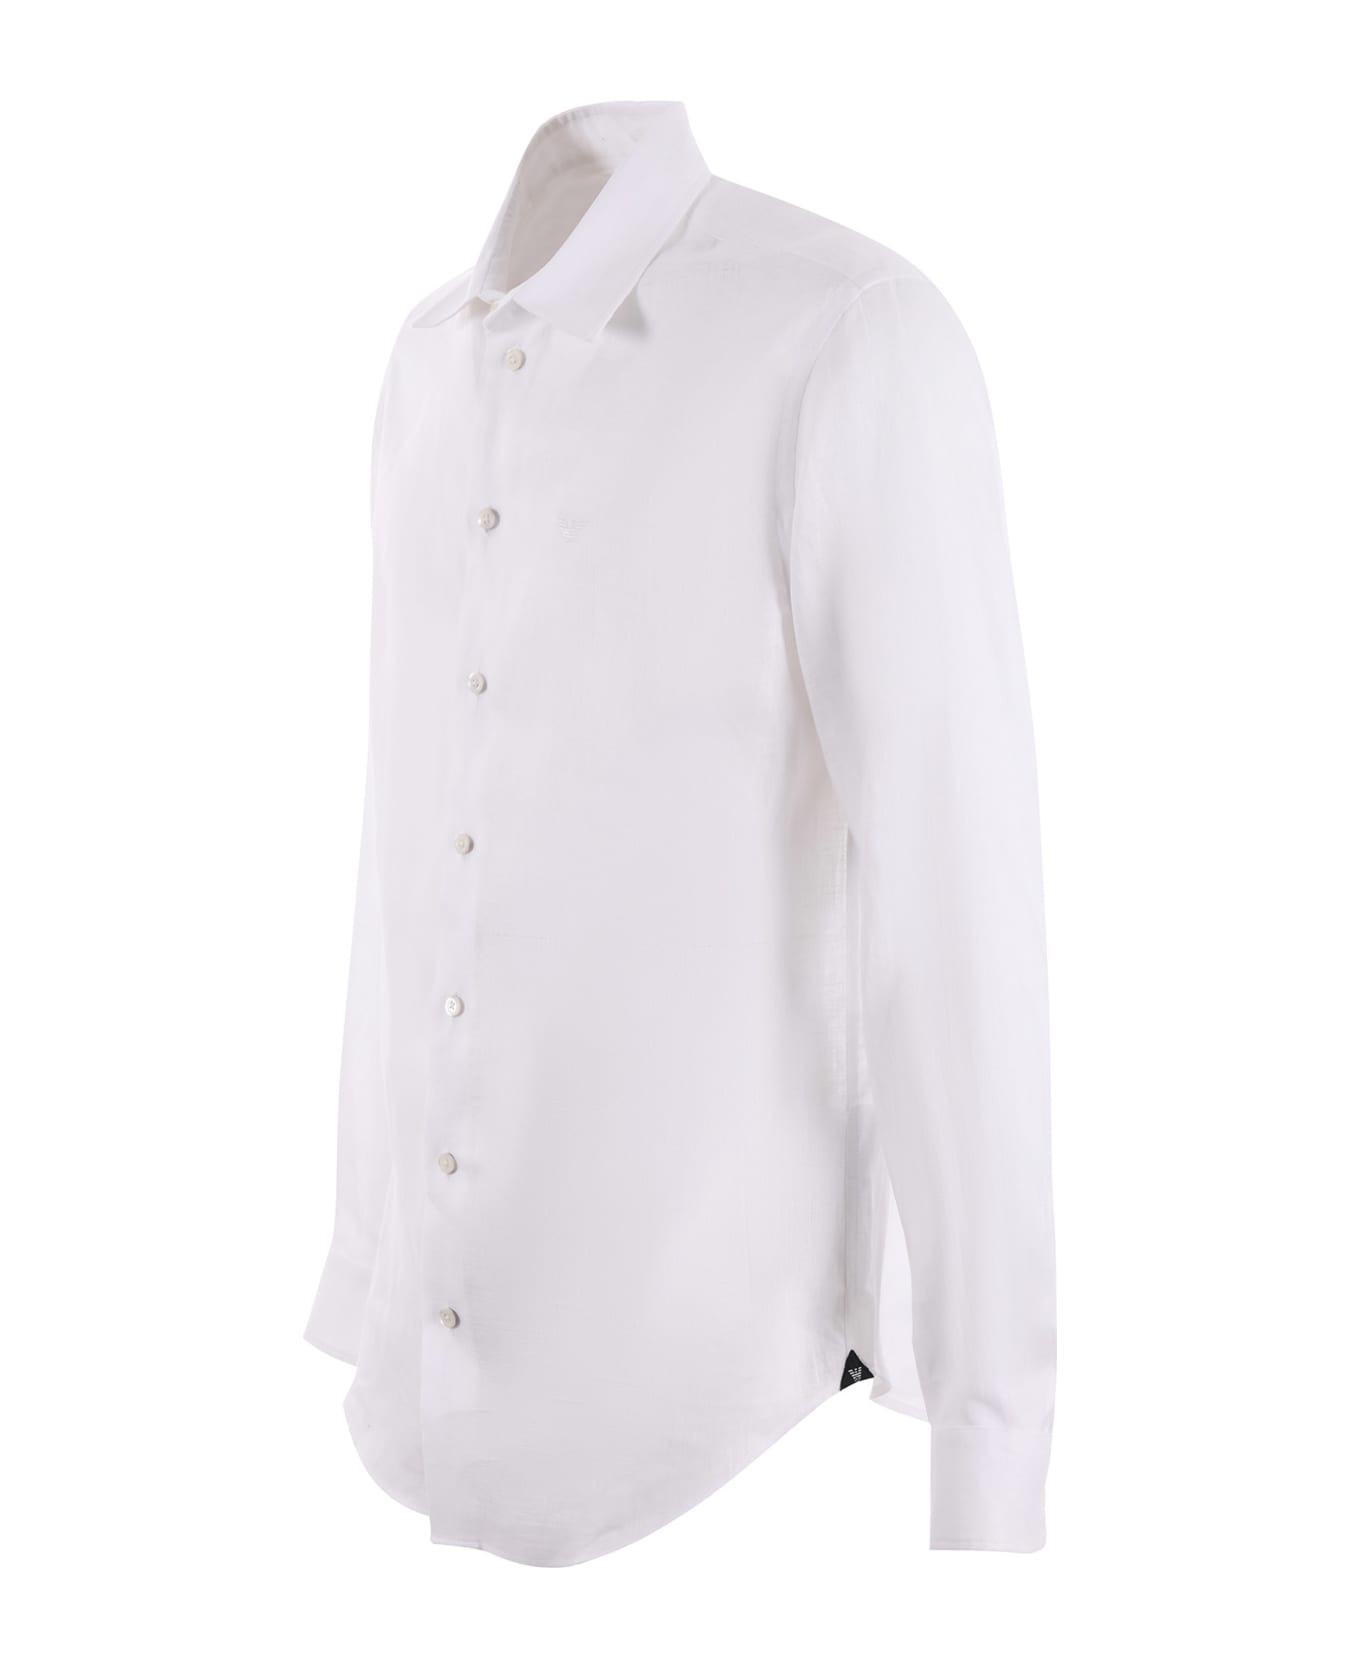 Emporio Armani Shirt - Bianco シャツ